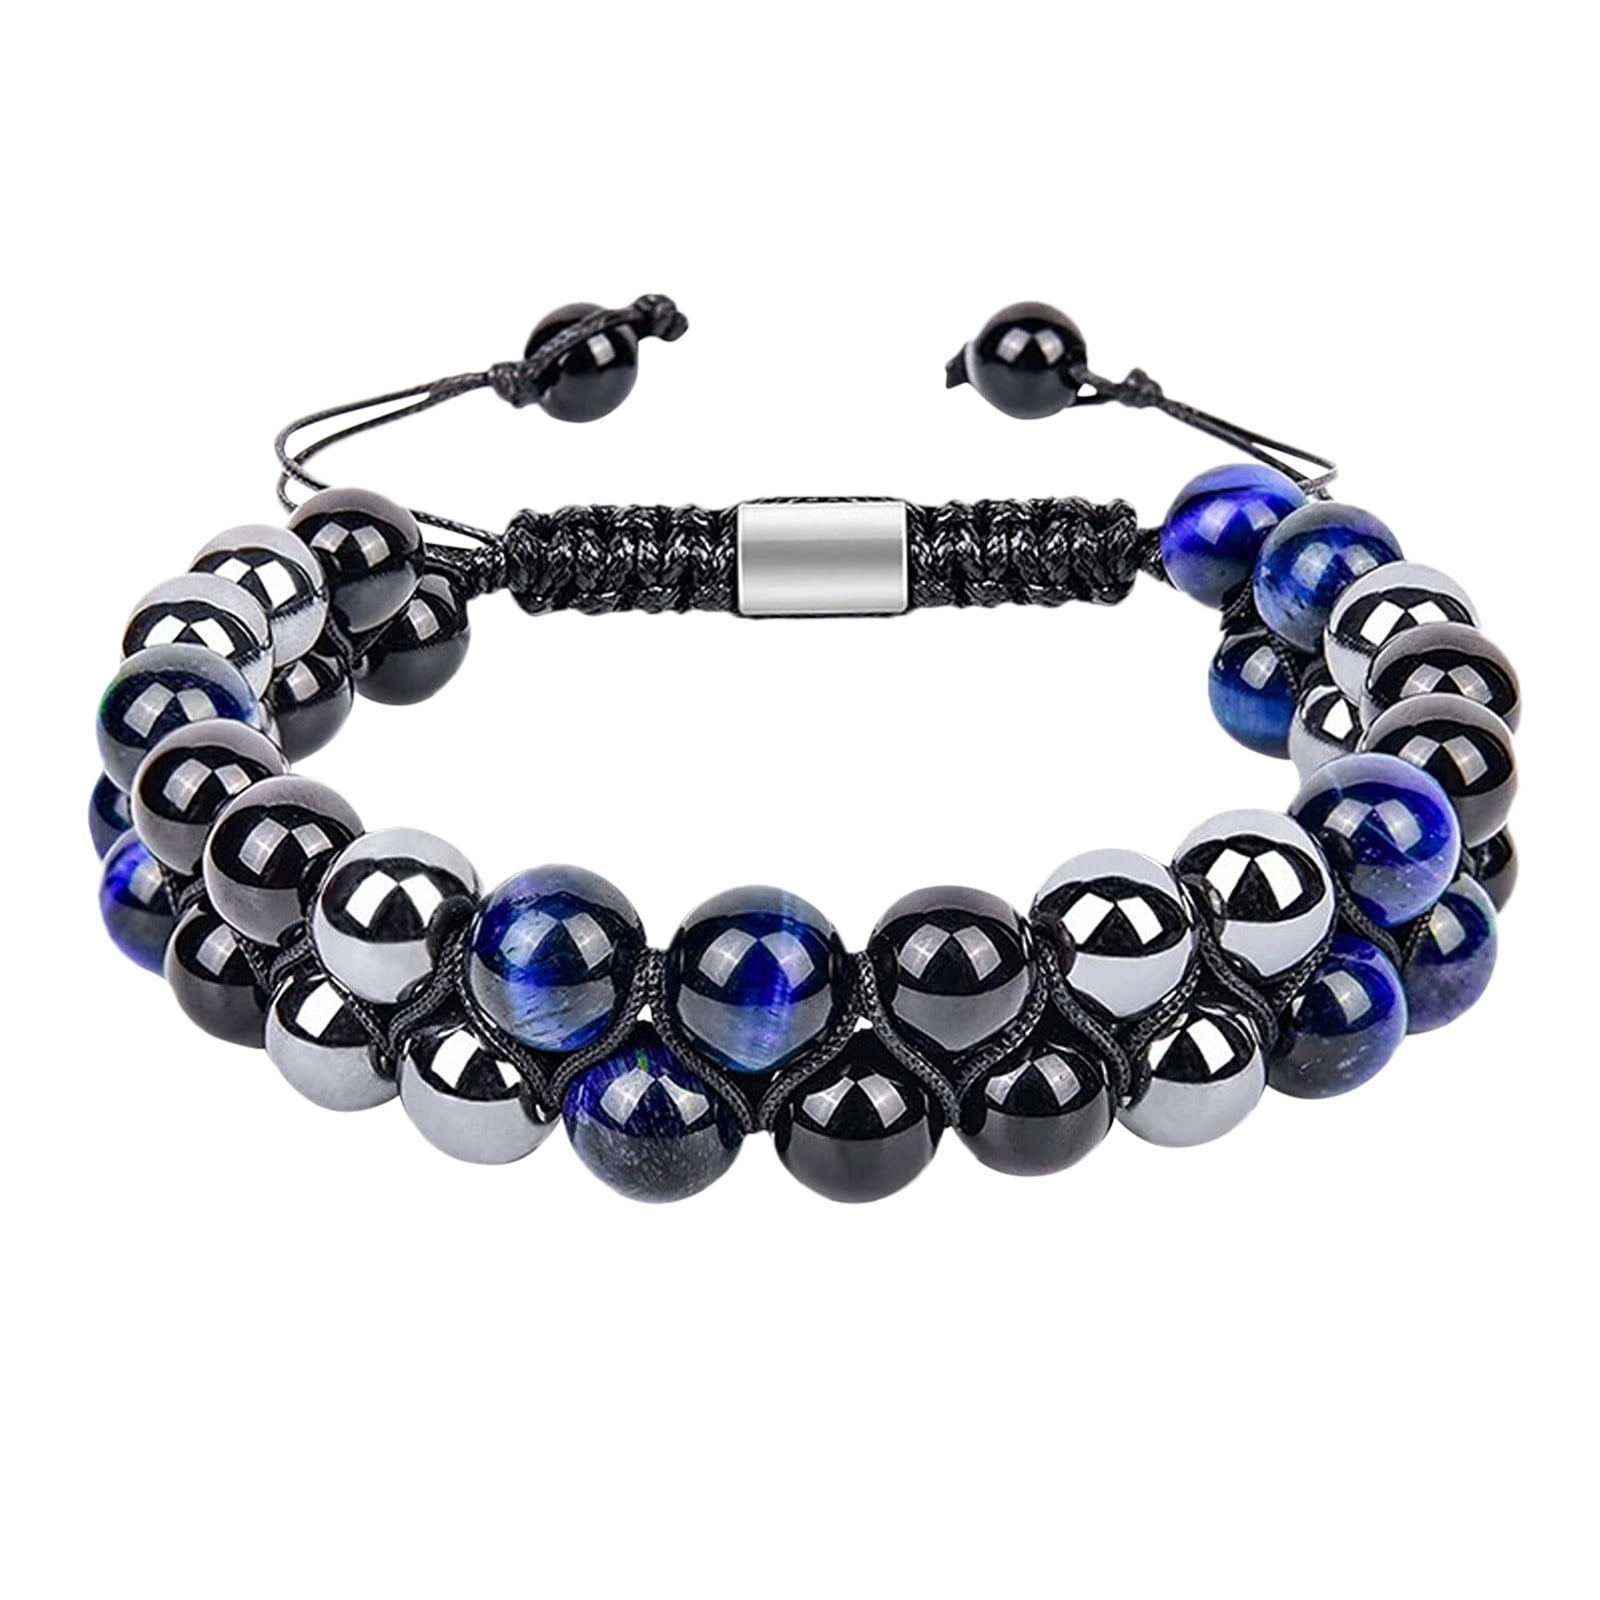 Tri bead single Domo Bracelets by ToxicStar - Kandi Photos on Kandi Patterns